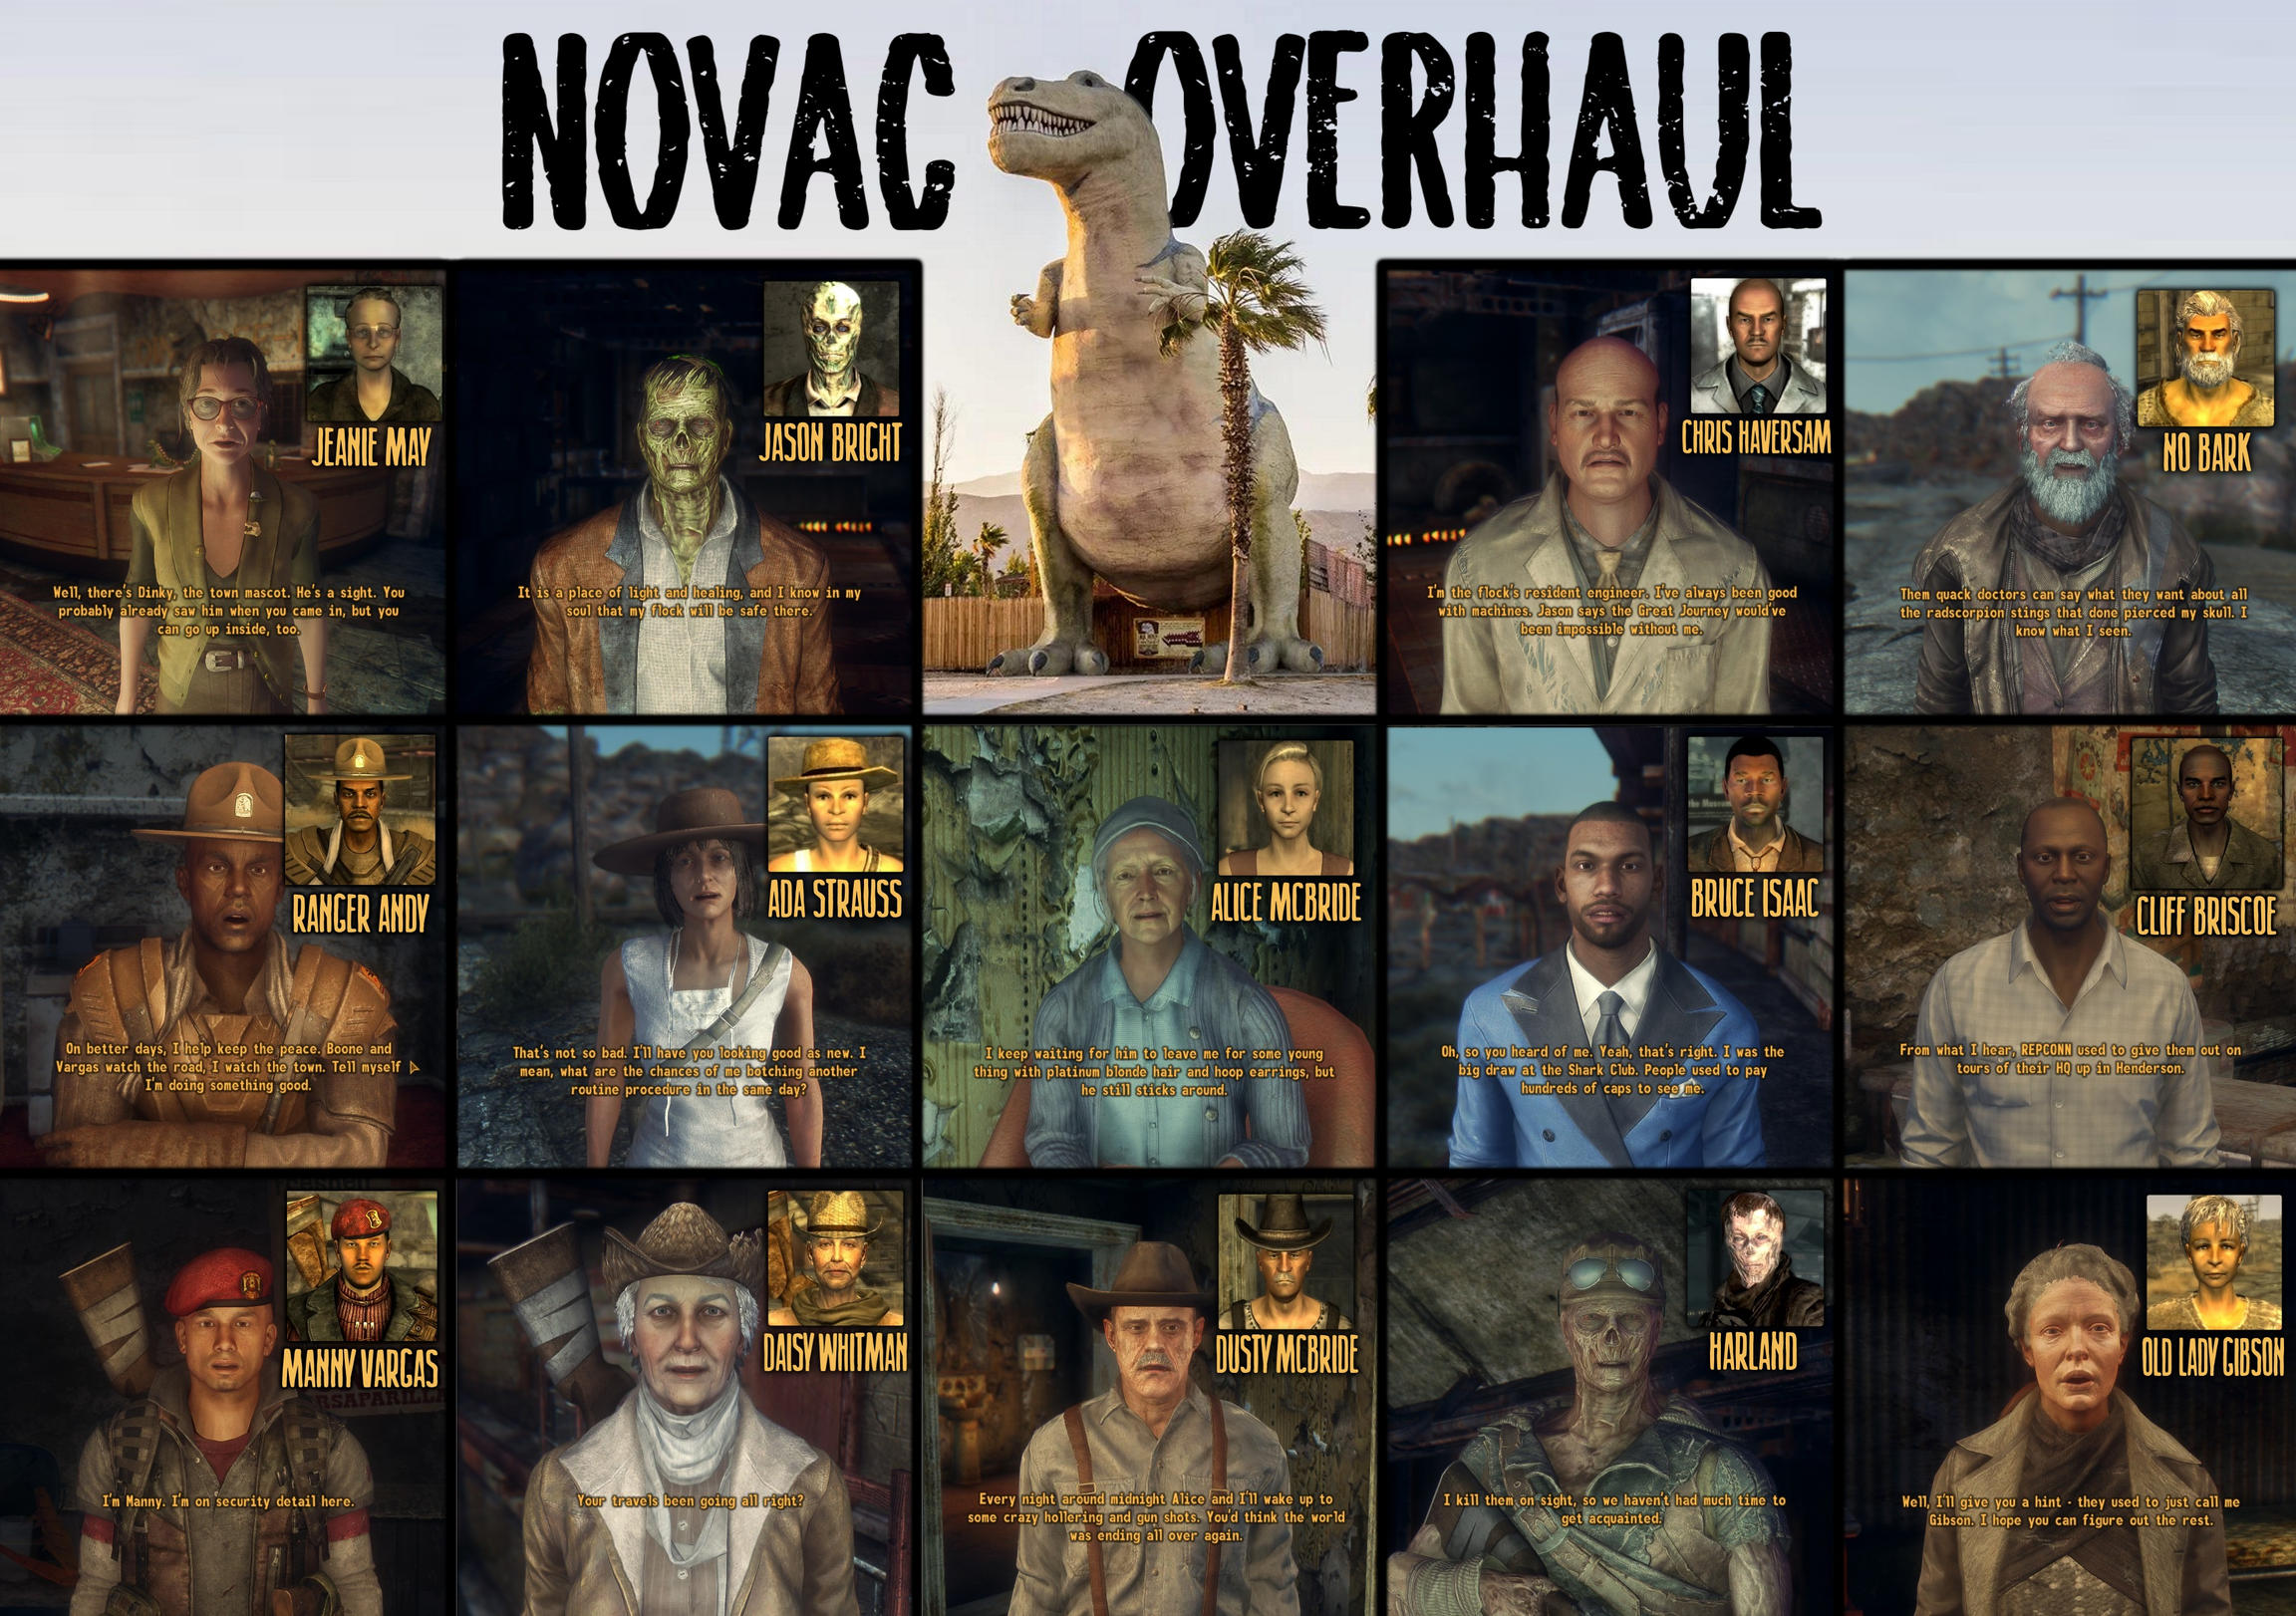 Novac Overhaul available on GUN! by dragbody on DeviantArt